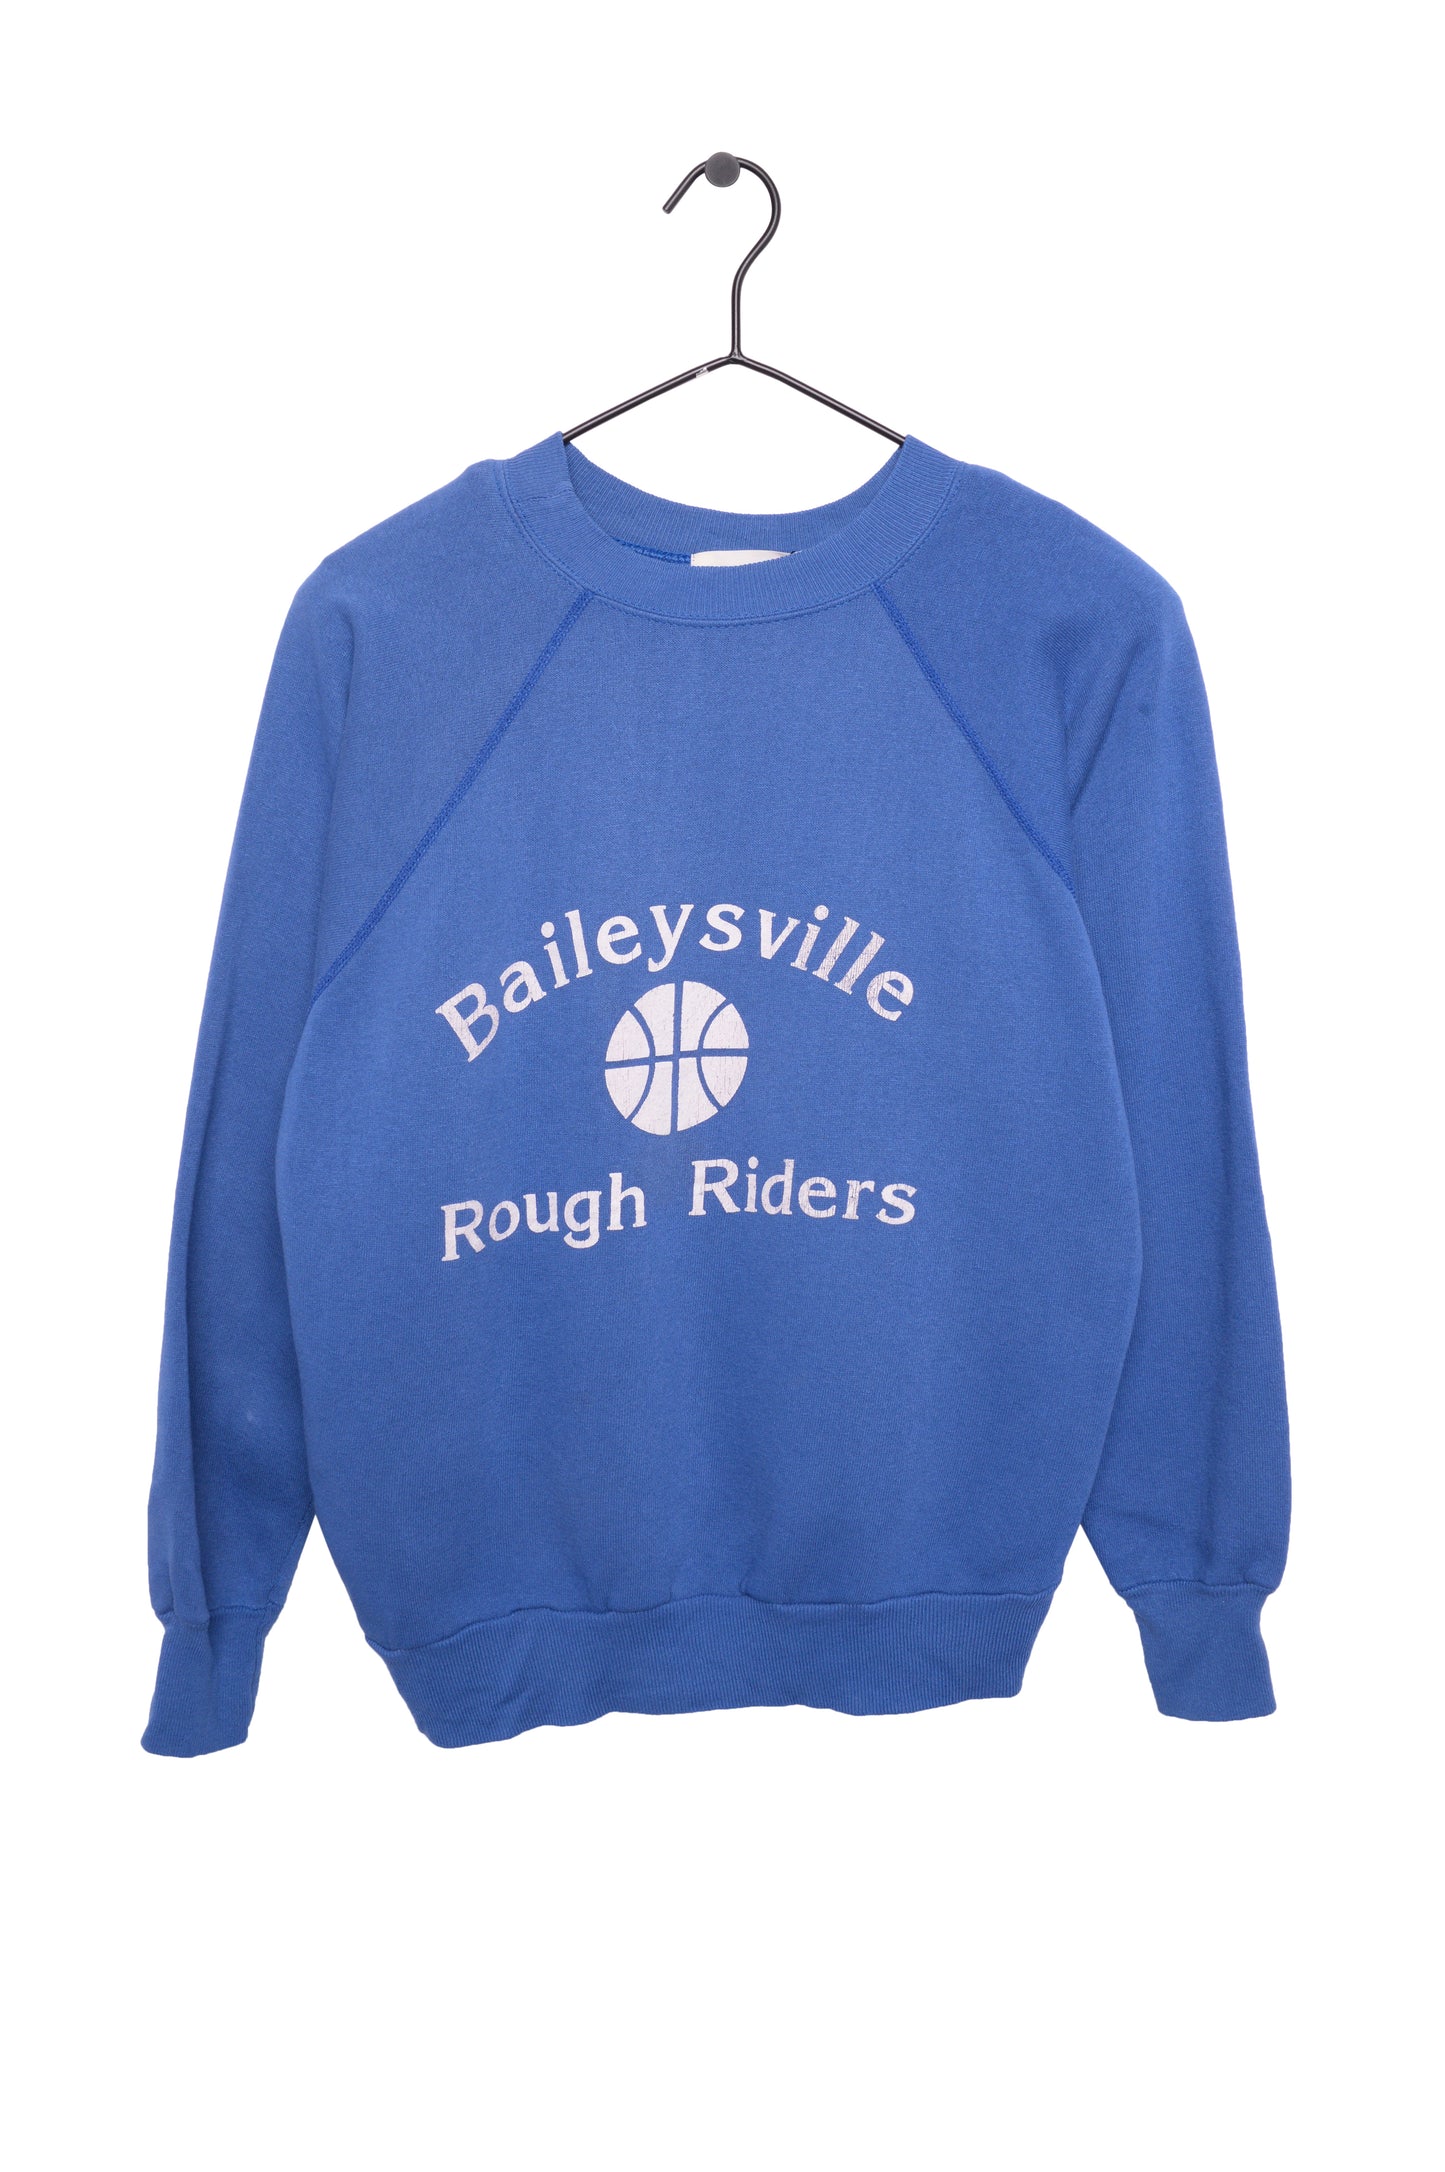 Baileysville Rough Riders Sweatshirt USA